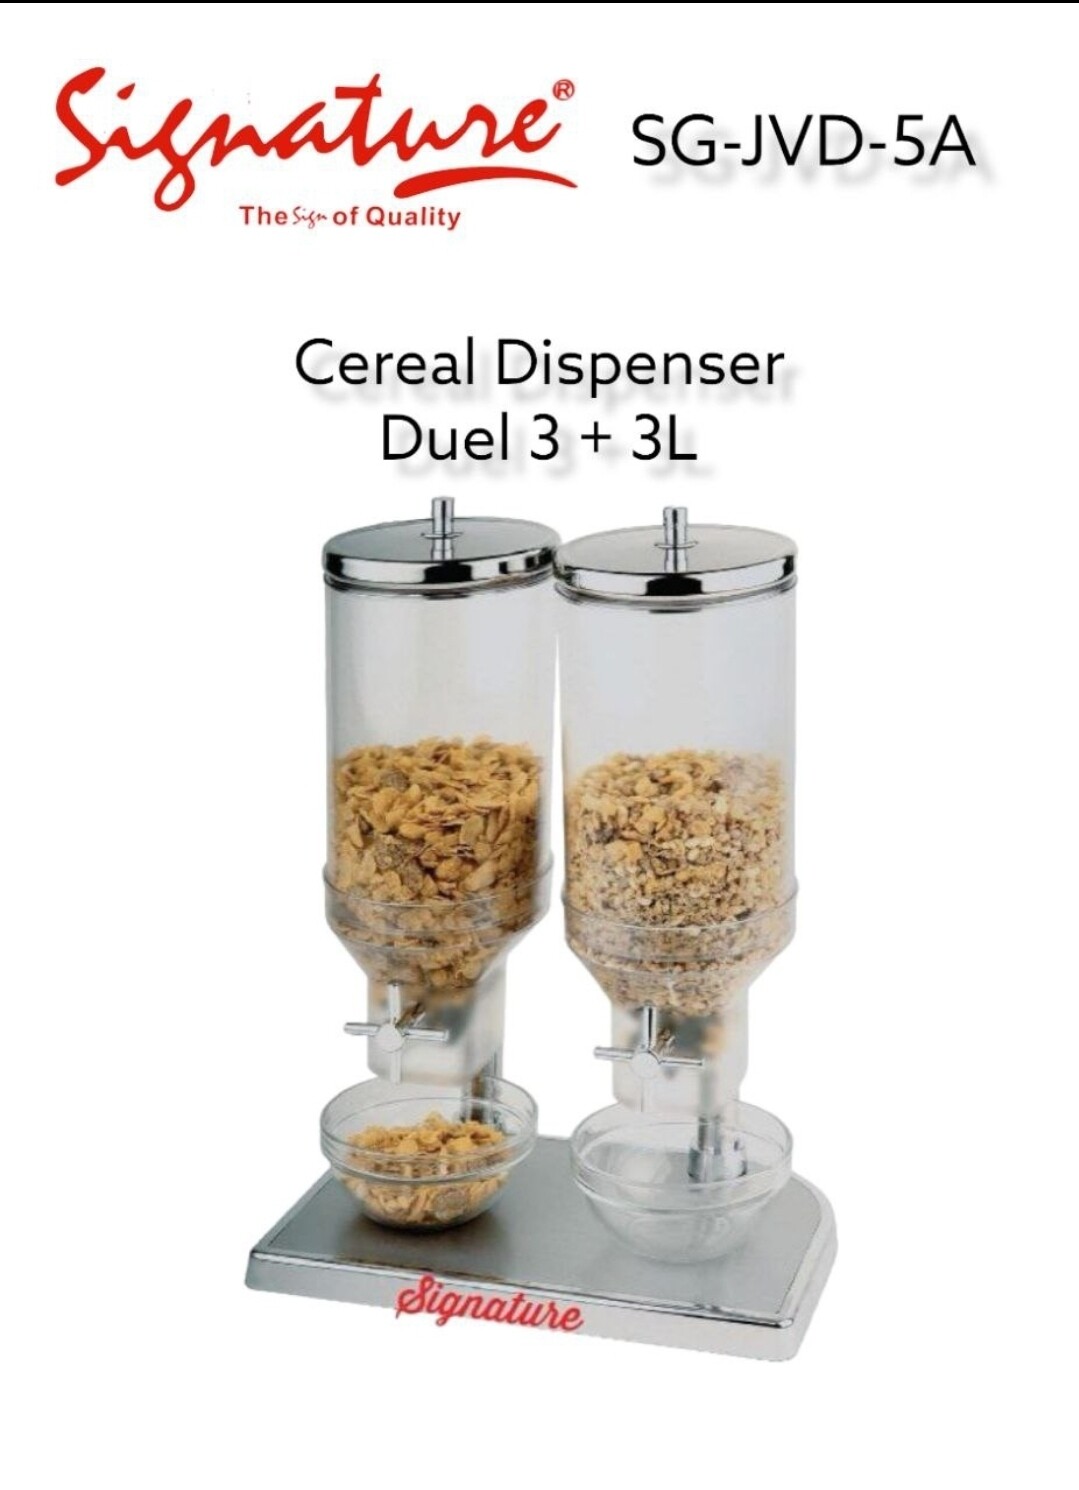 Signature Duel Cereal Dispenser Capacity 3+3 Ltr SG-JVD-5A